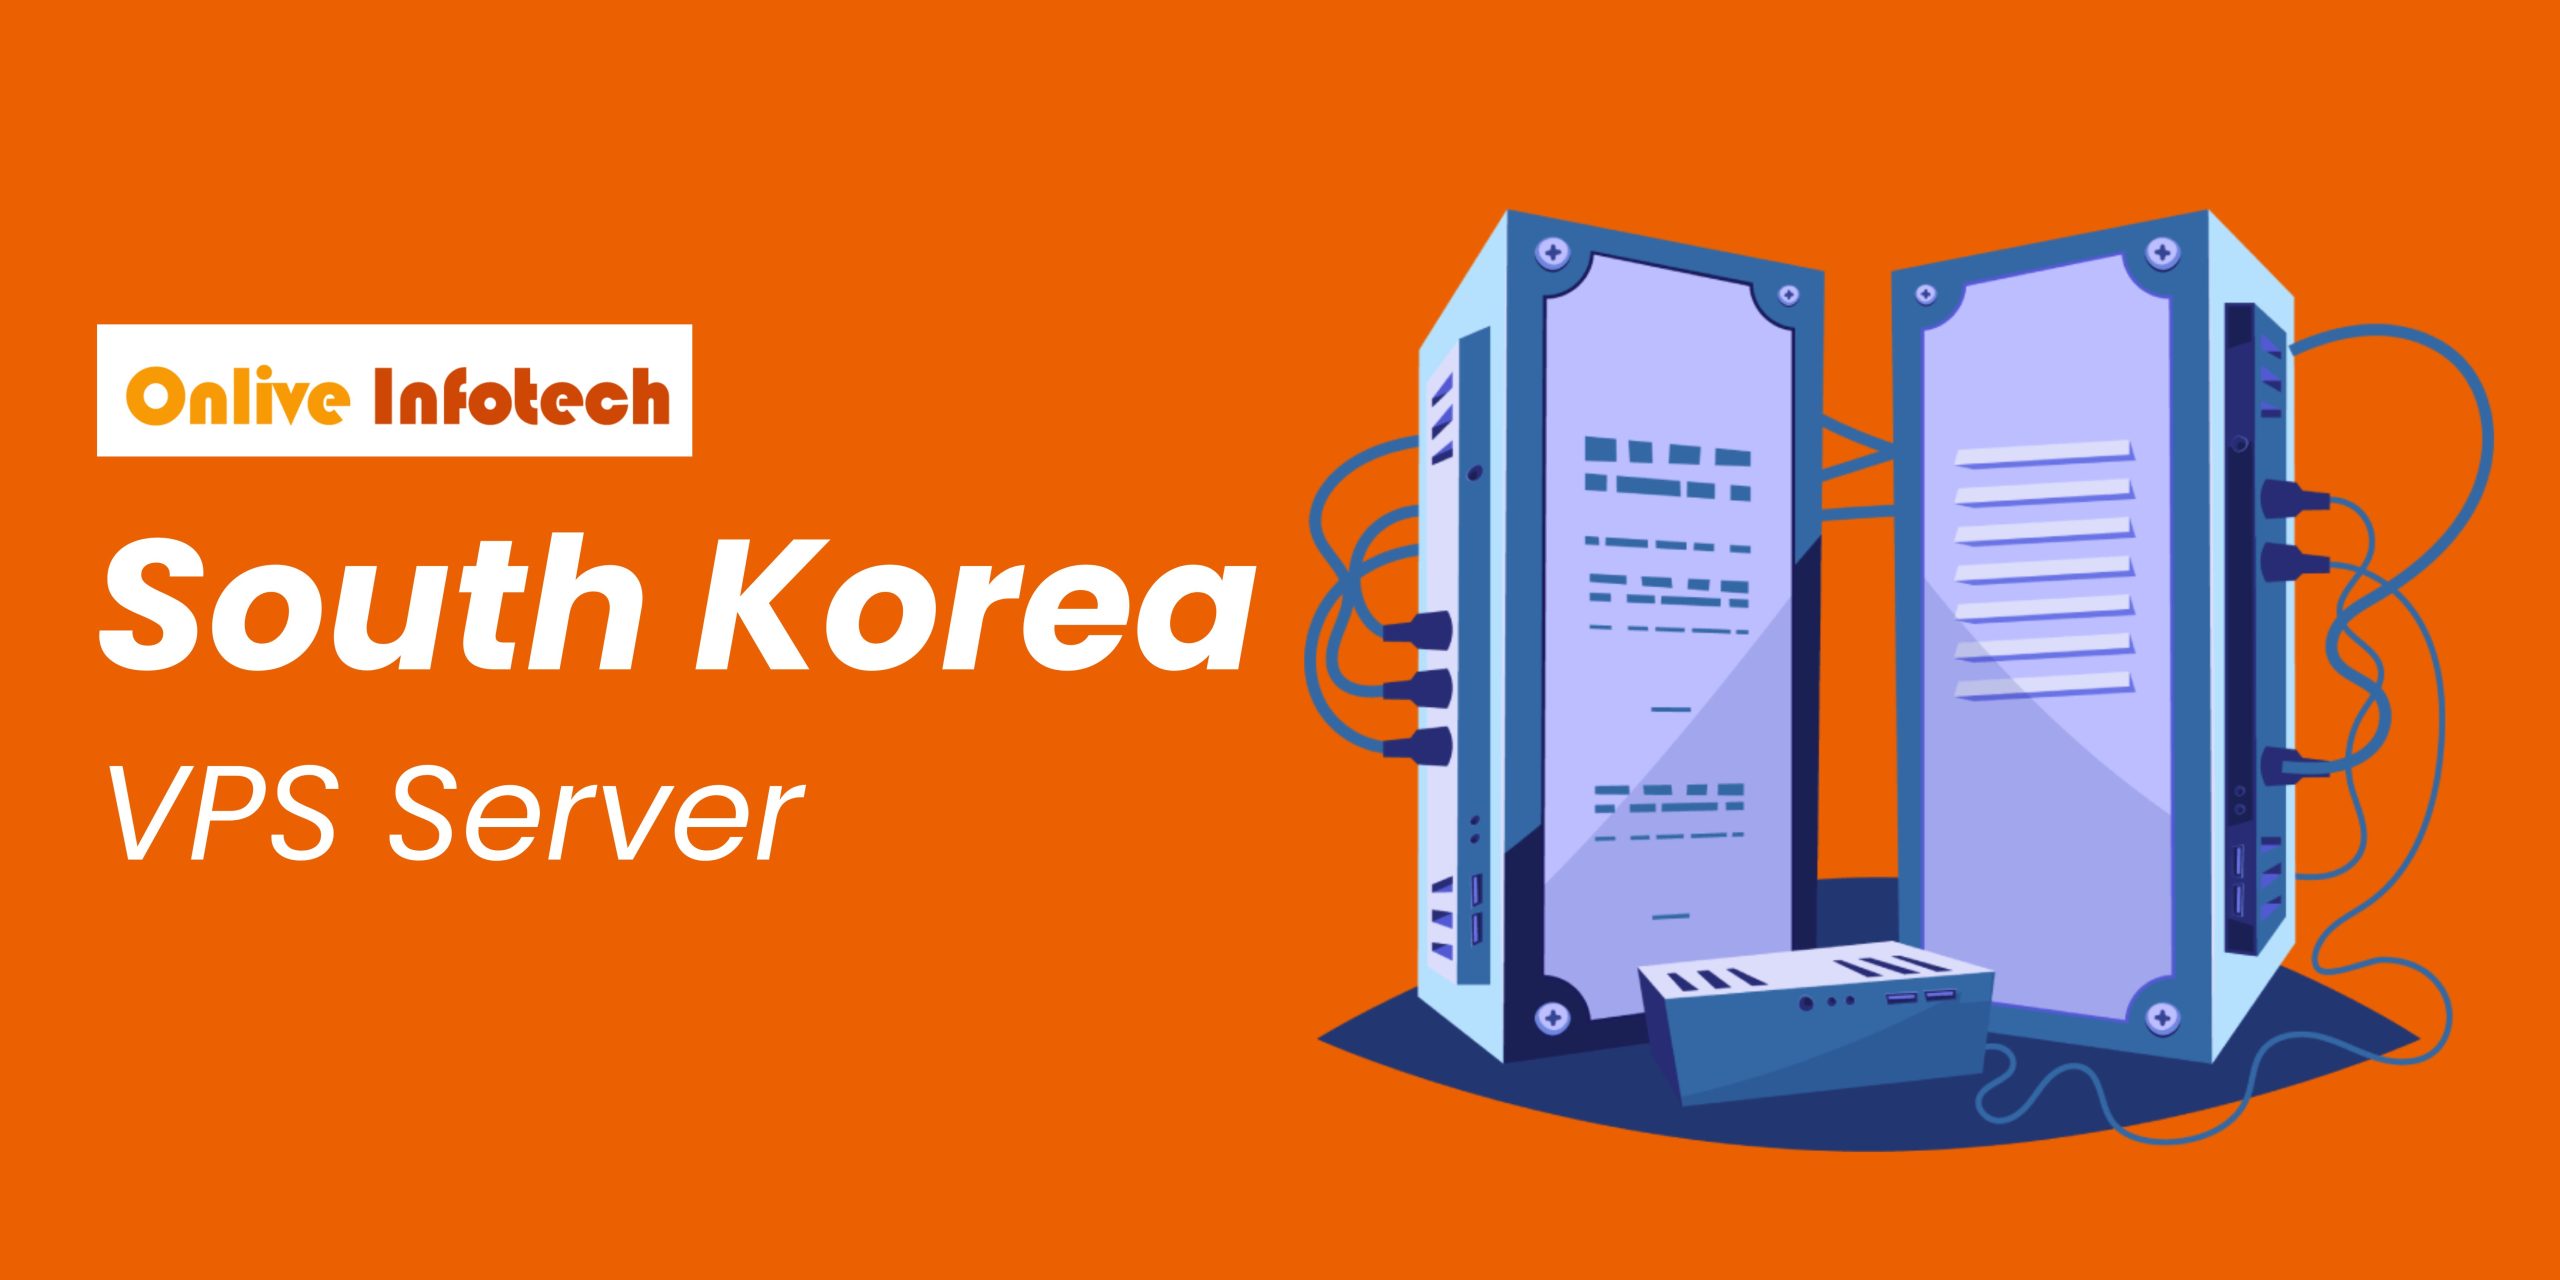 South Korea VPS Server A Powerhouse for Website Performance